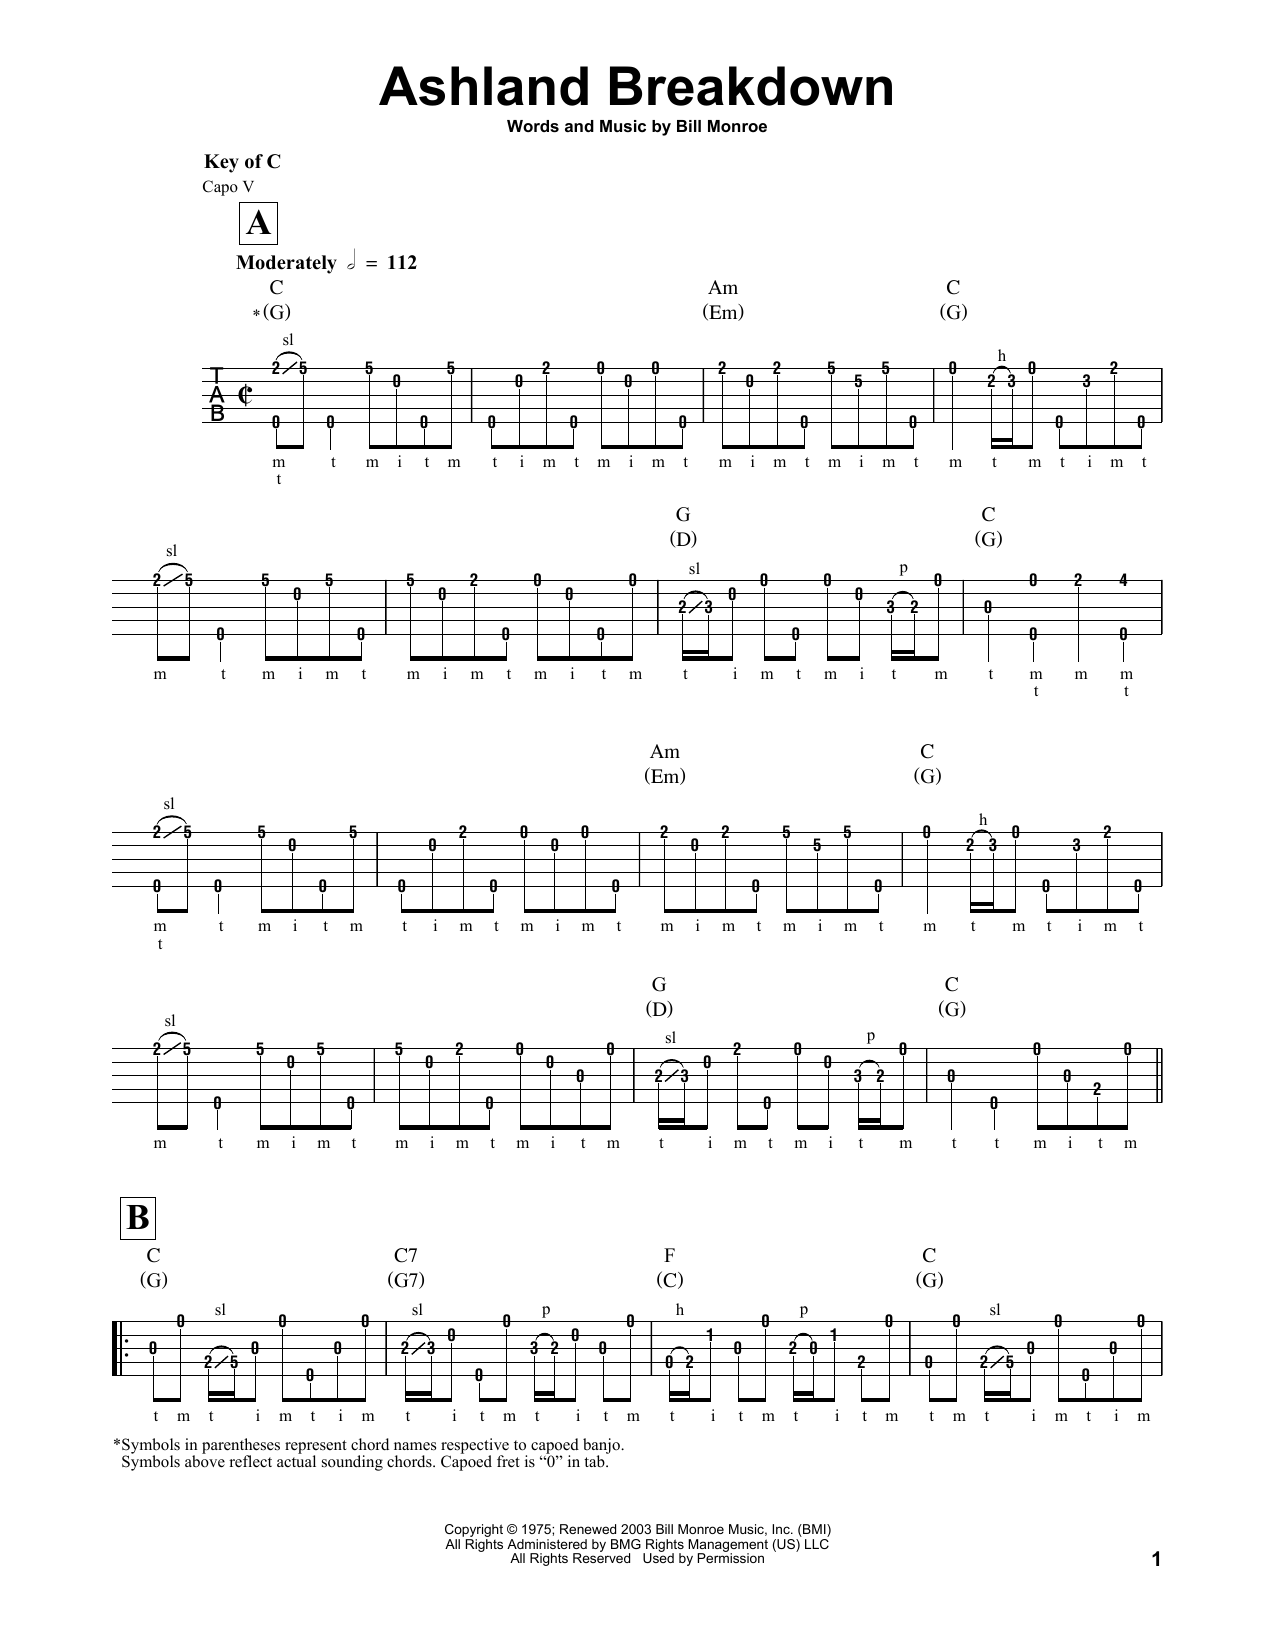 Bill Monroe Ashland Breakdown Sheet Music Notes & Chords for Banjo - Download or Print PDF